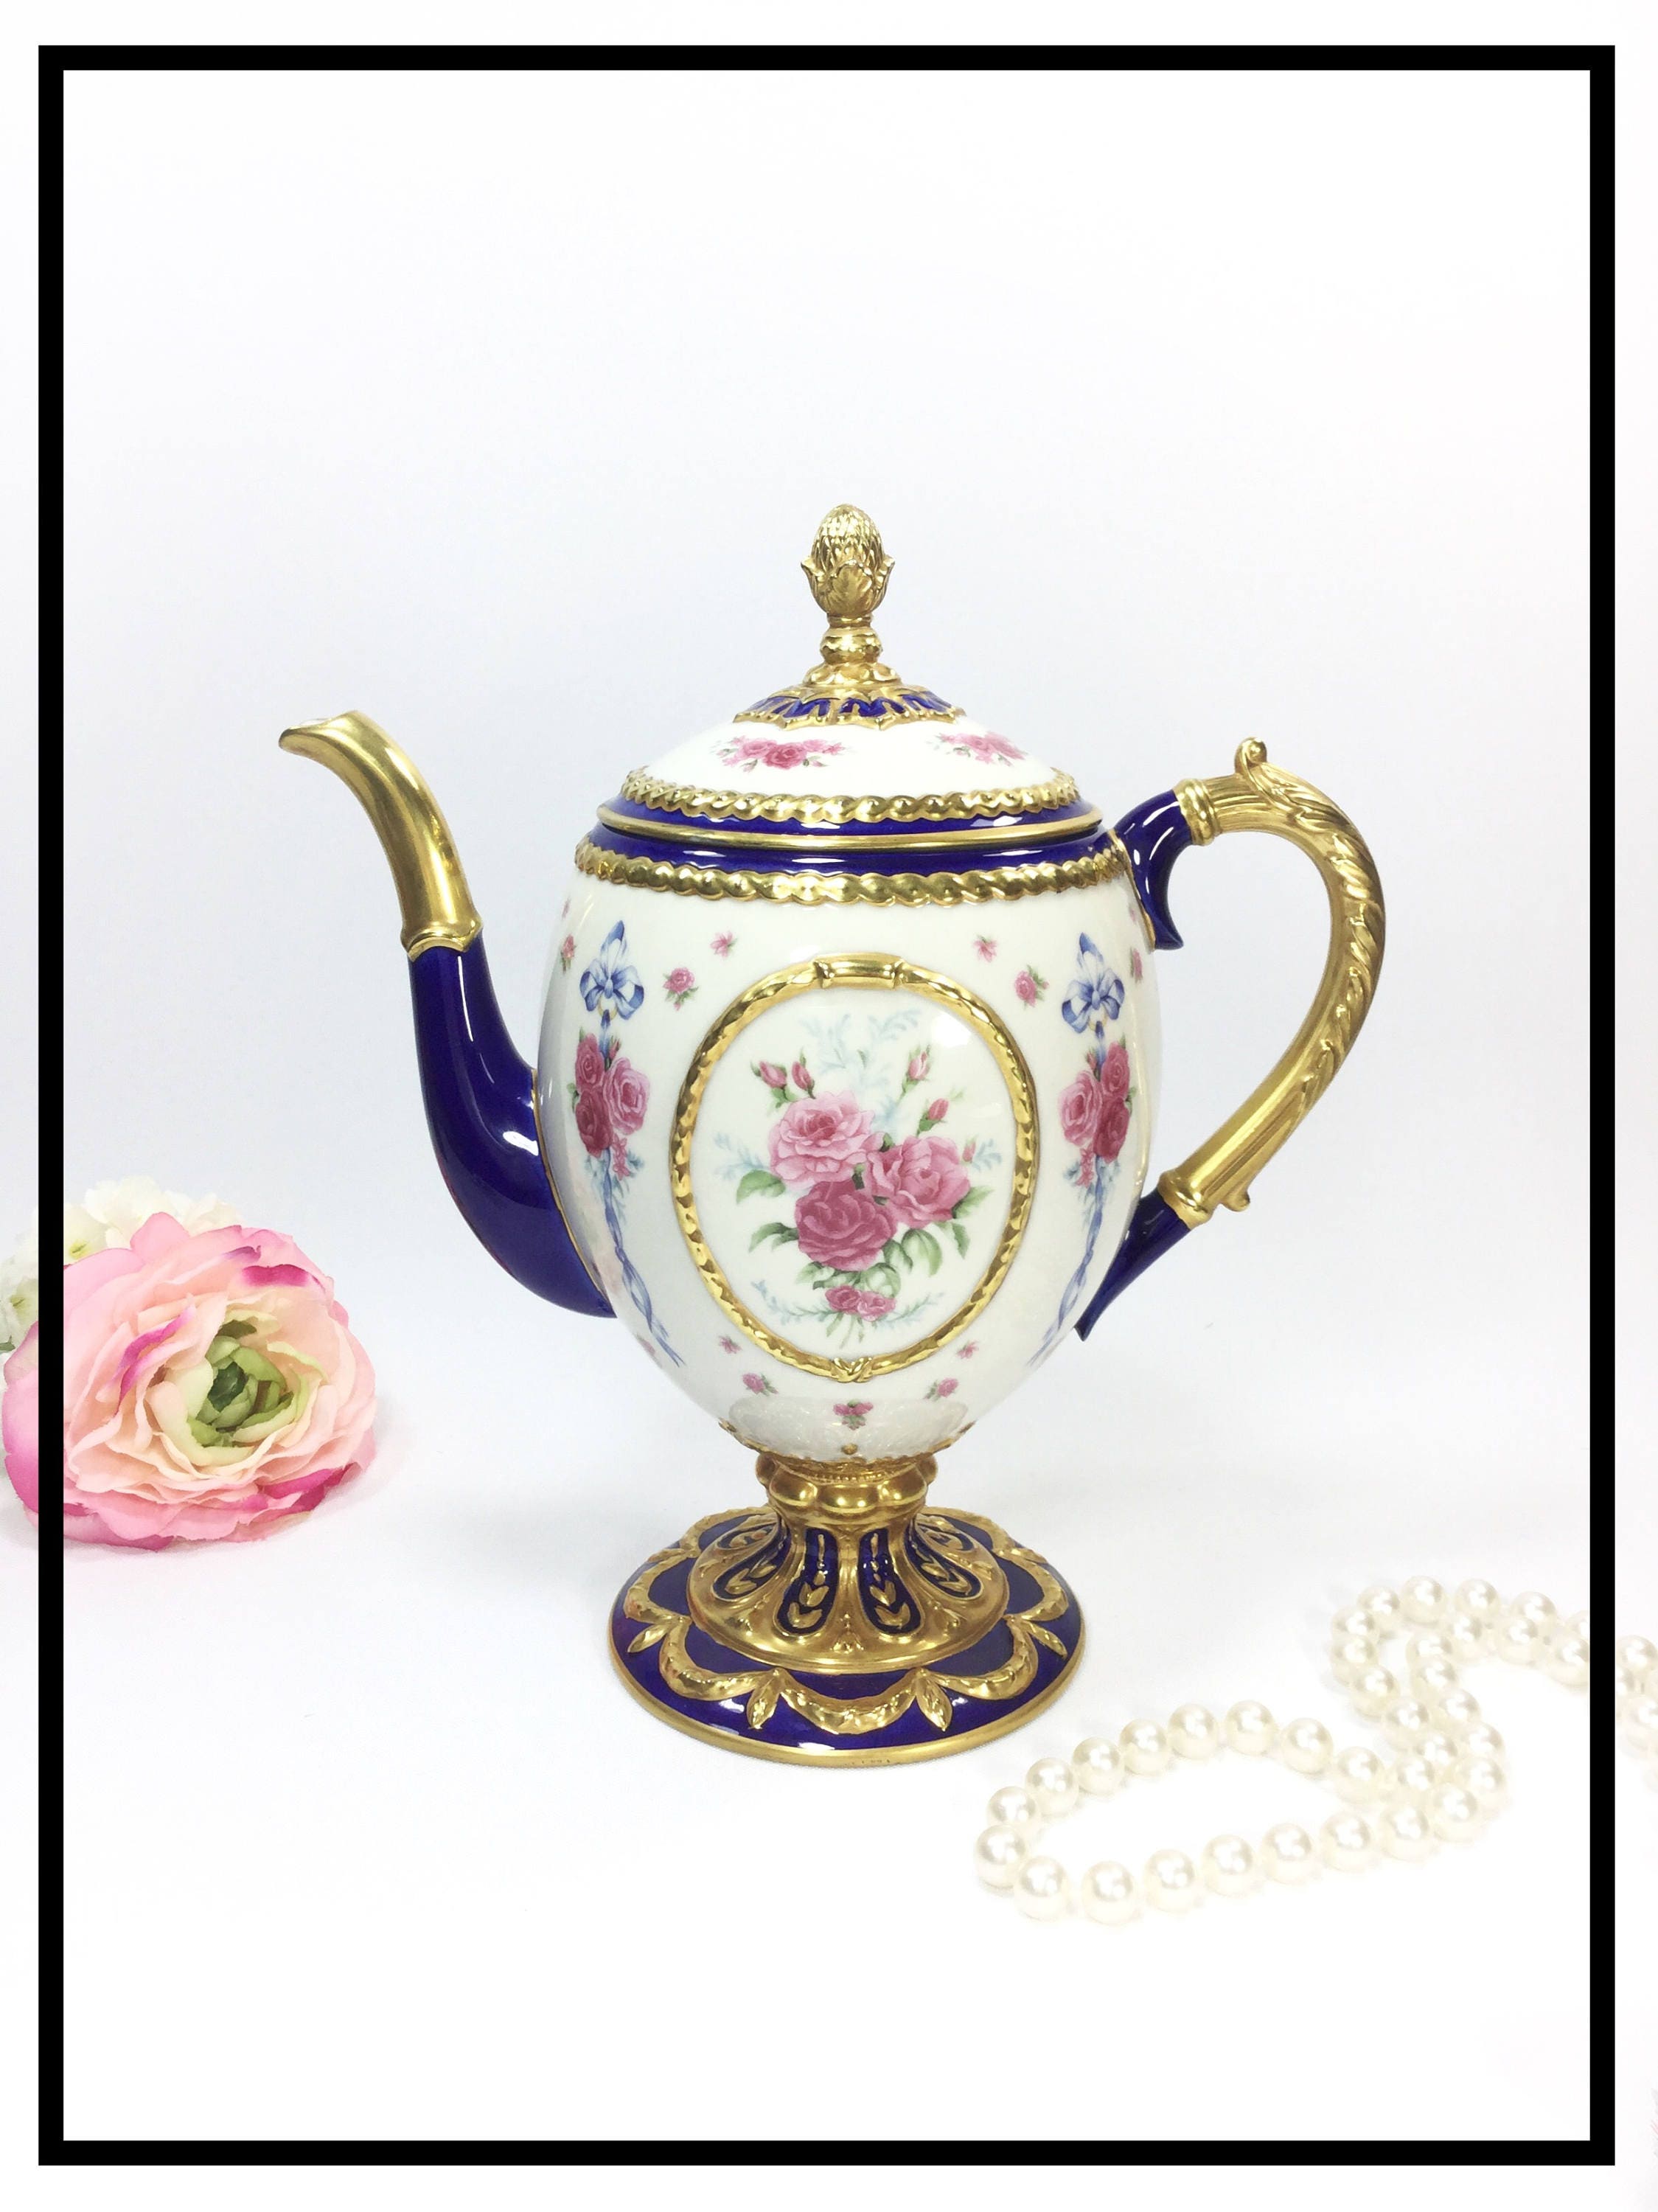 Vintage Faberge Imperial Teapot, Franklin Mint 24K Gold Accent